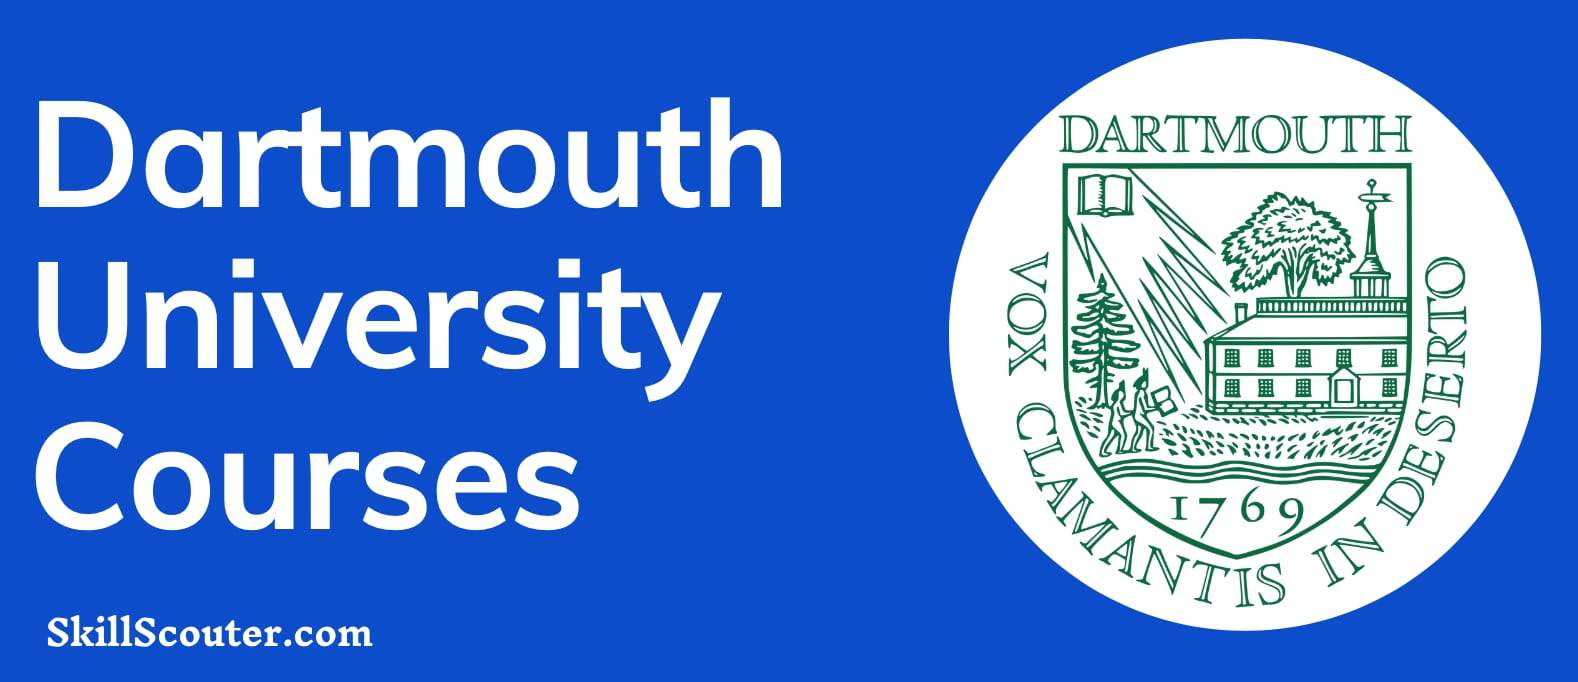 dartmouth university